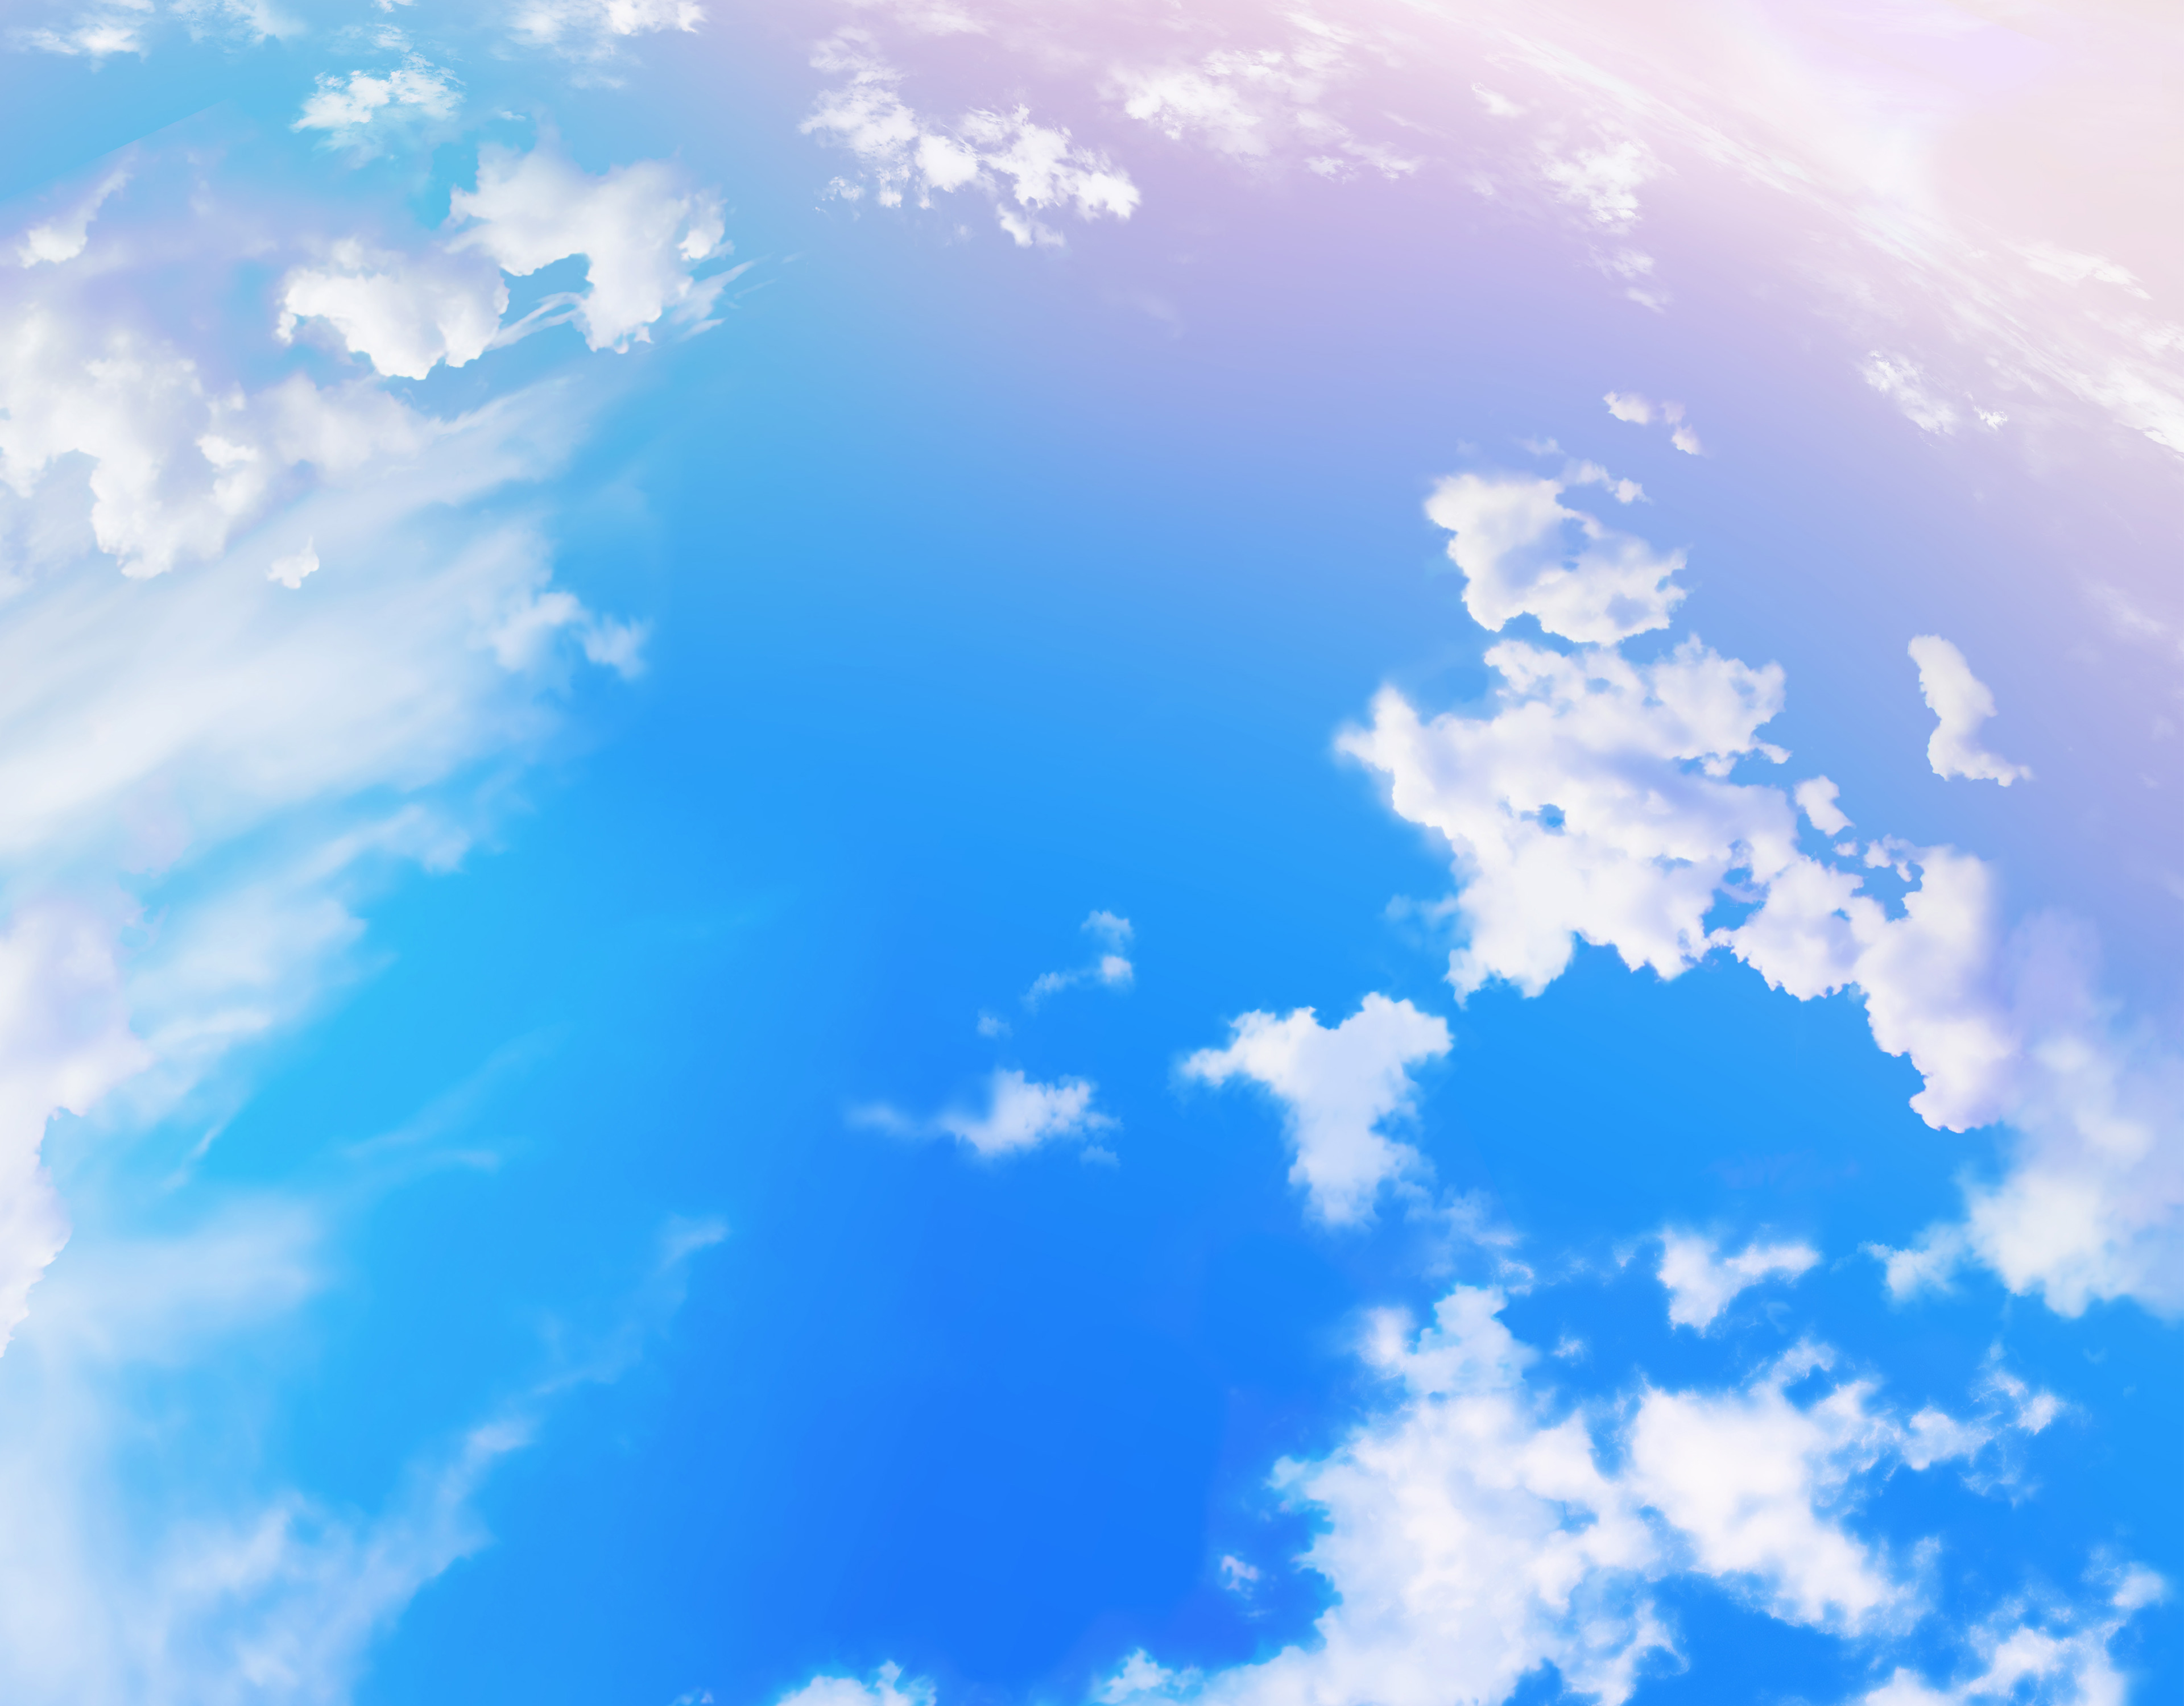 Anime Bubble HD Wallpaper | Background Image